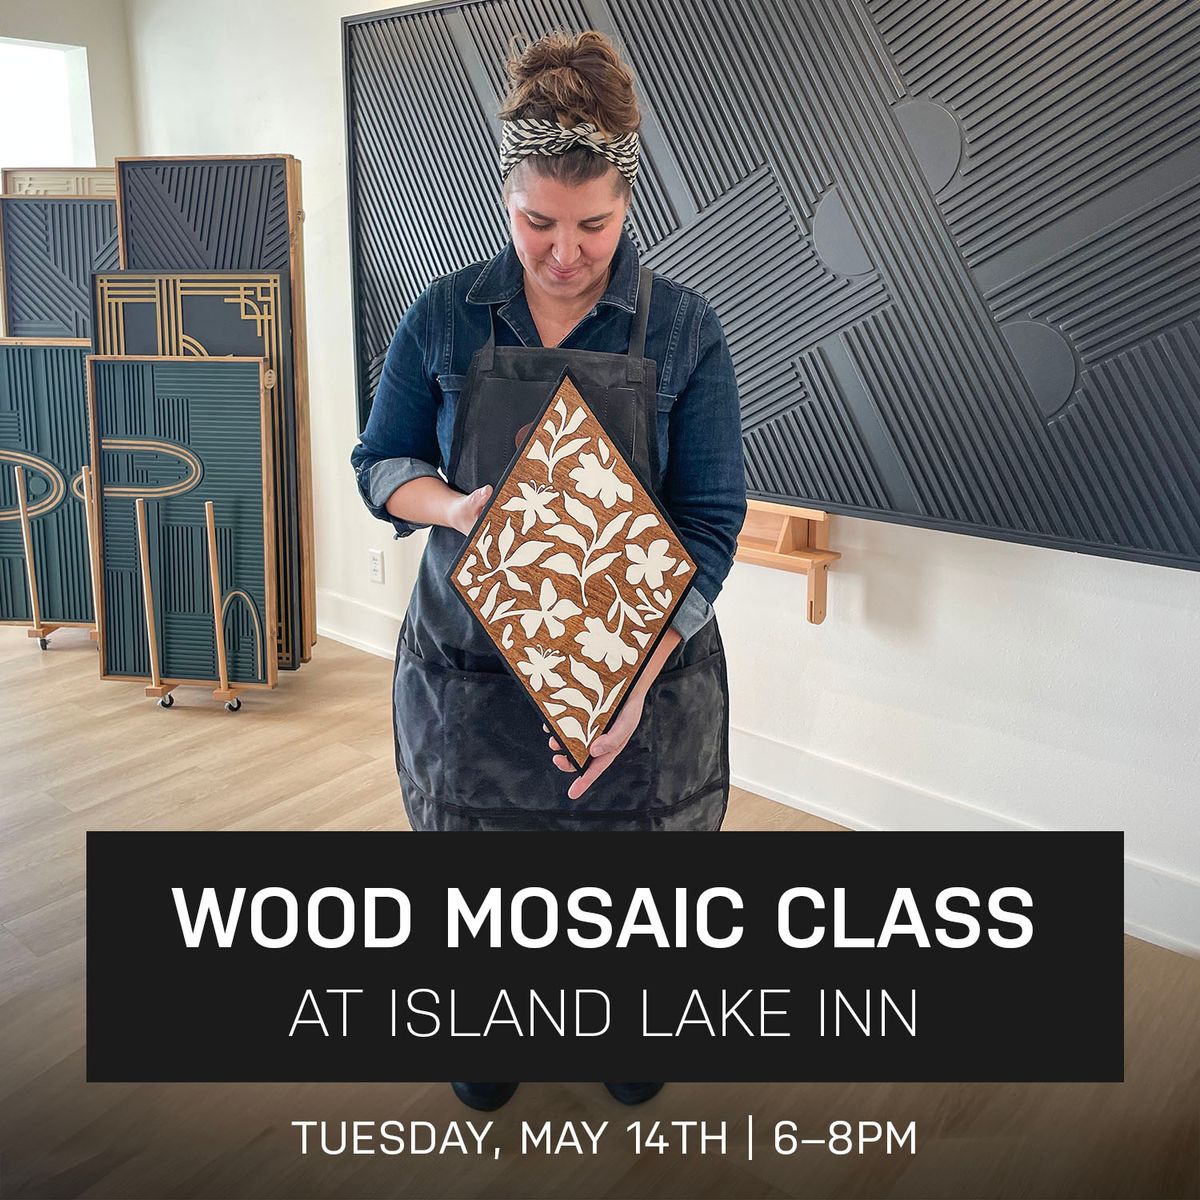 Bloom Wood Mosaic Class at Island Lake Inn